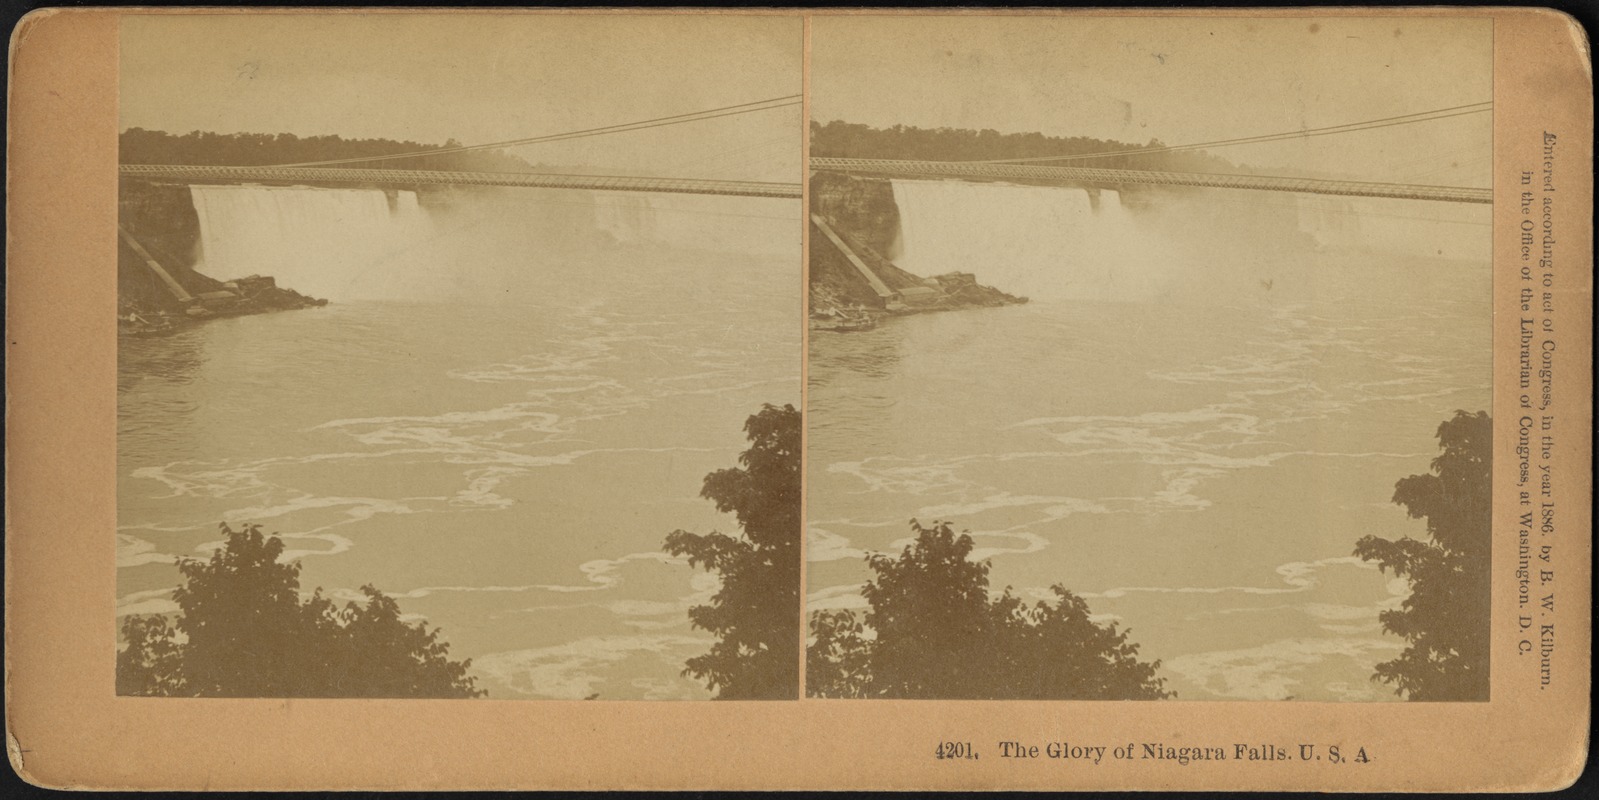 The glory of Niagara Falls, U.S.A.